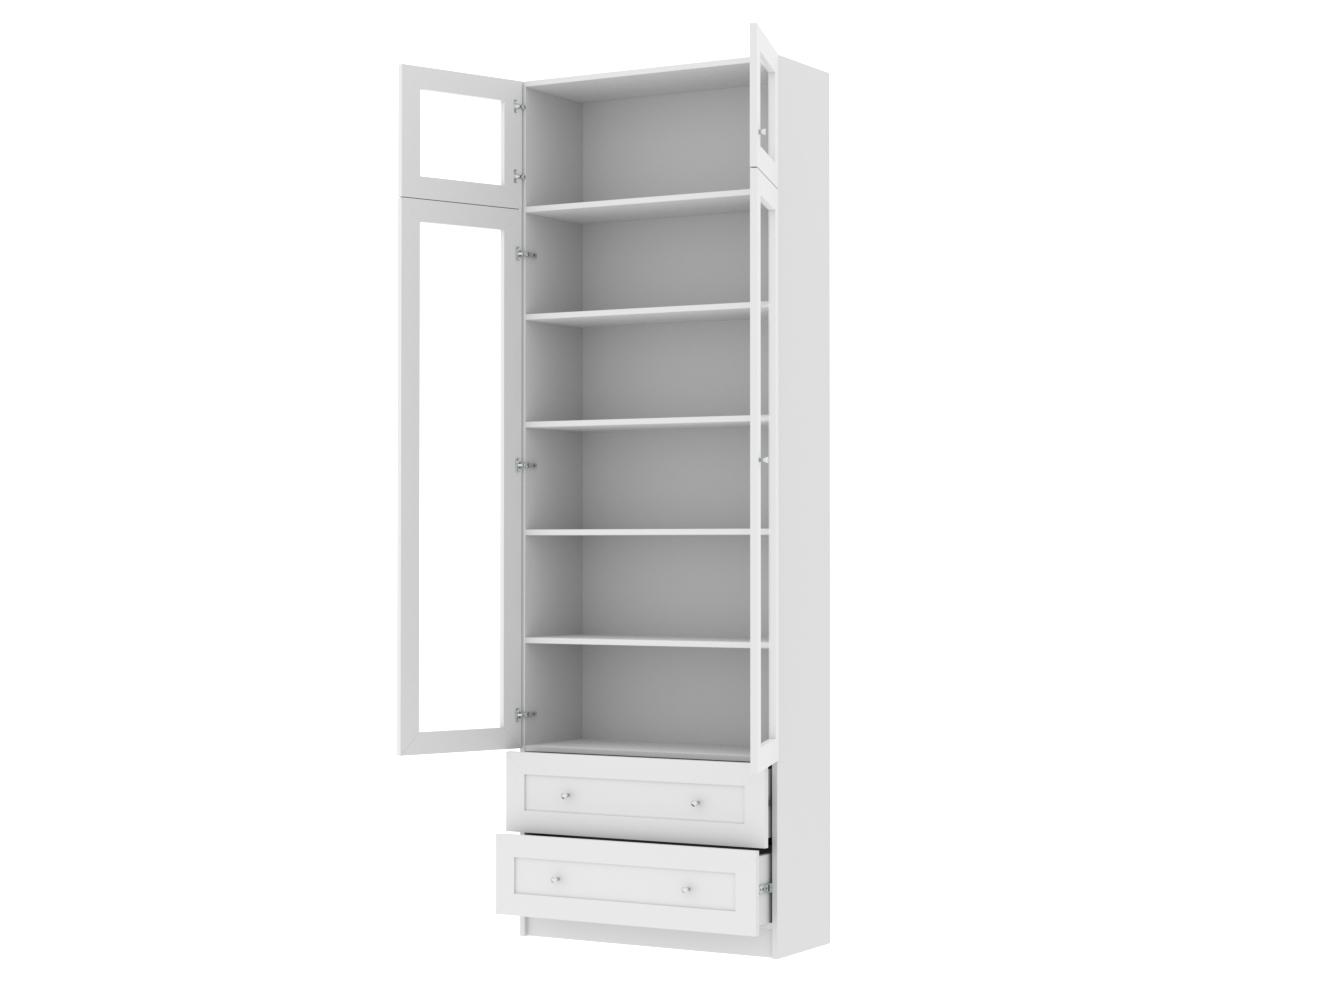 Книжный шкаф Билли 321 white ИКЕА (IKEA) изображение товара